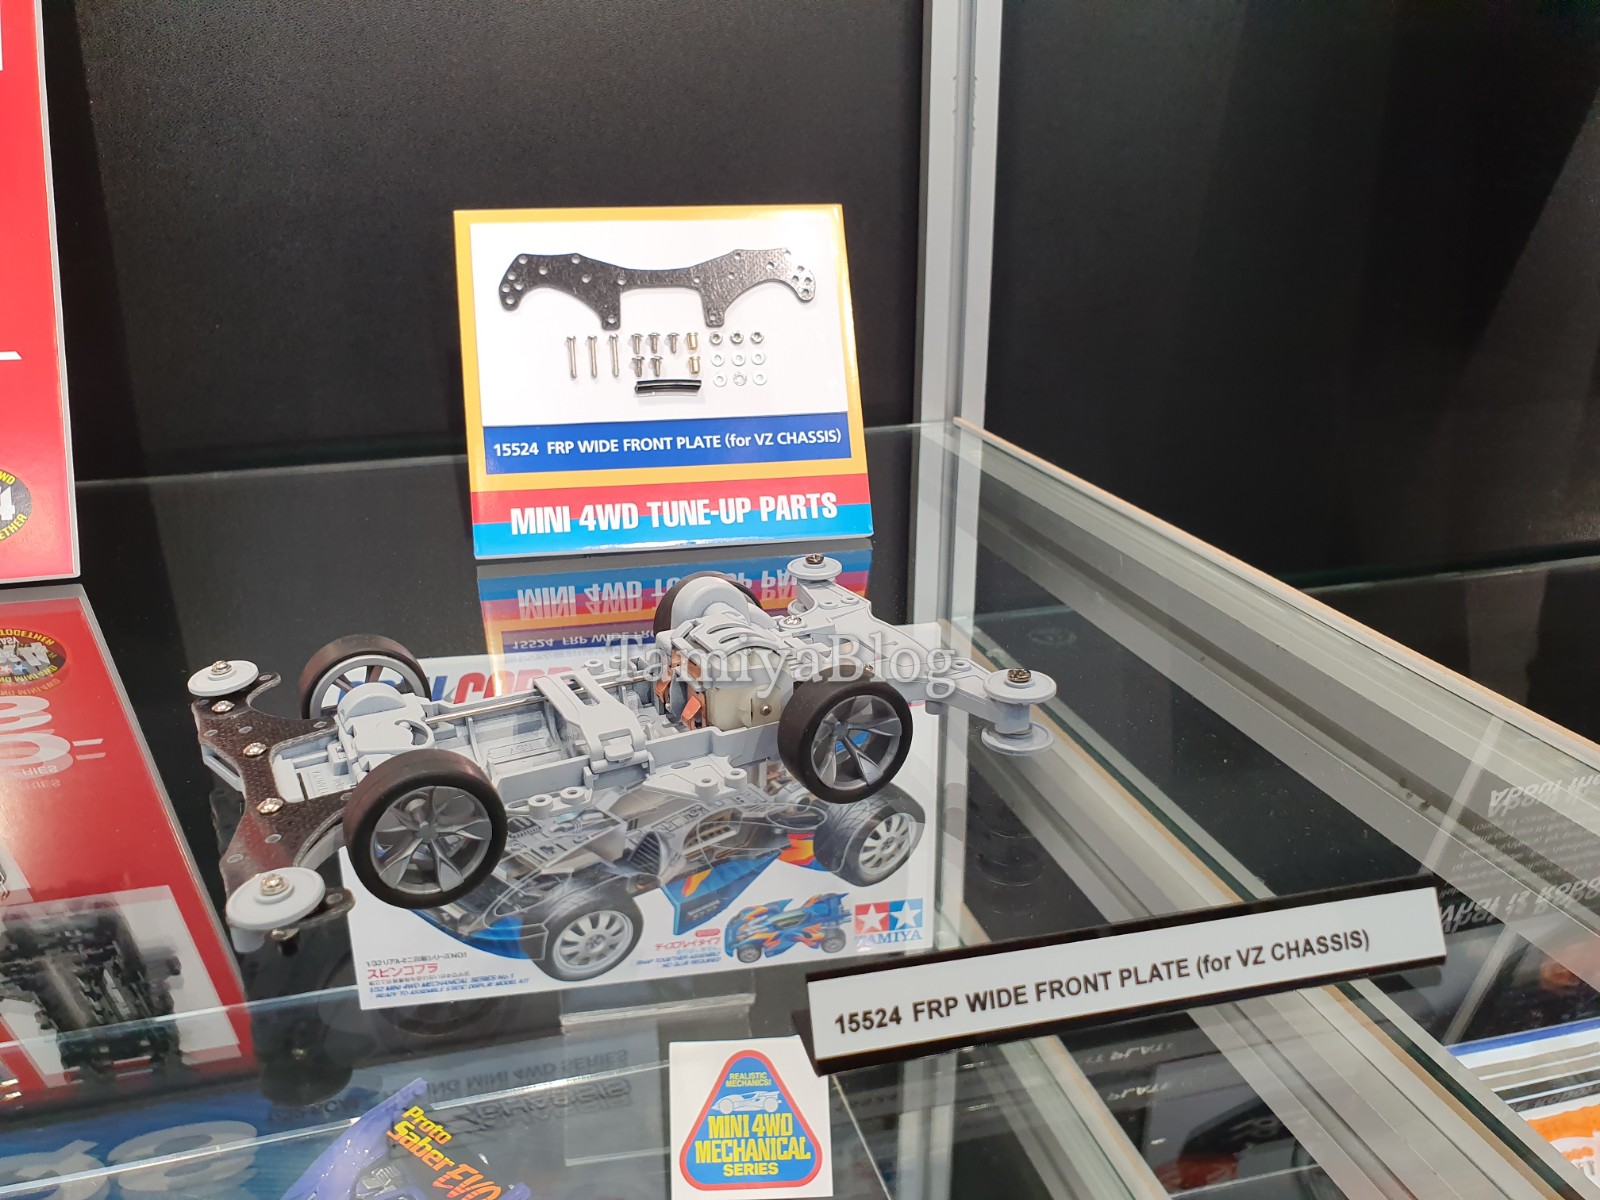 Tamiya Mini 4WD at Nuremberg Toy Fair 2020 - TamiyaBlog